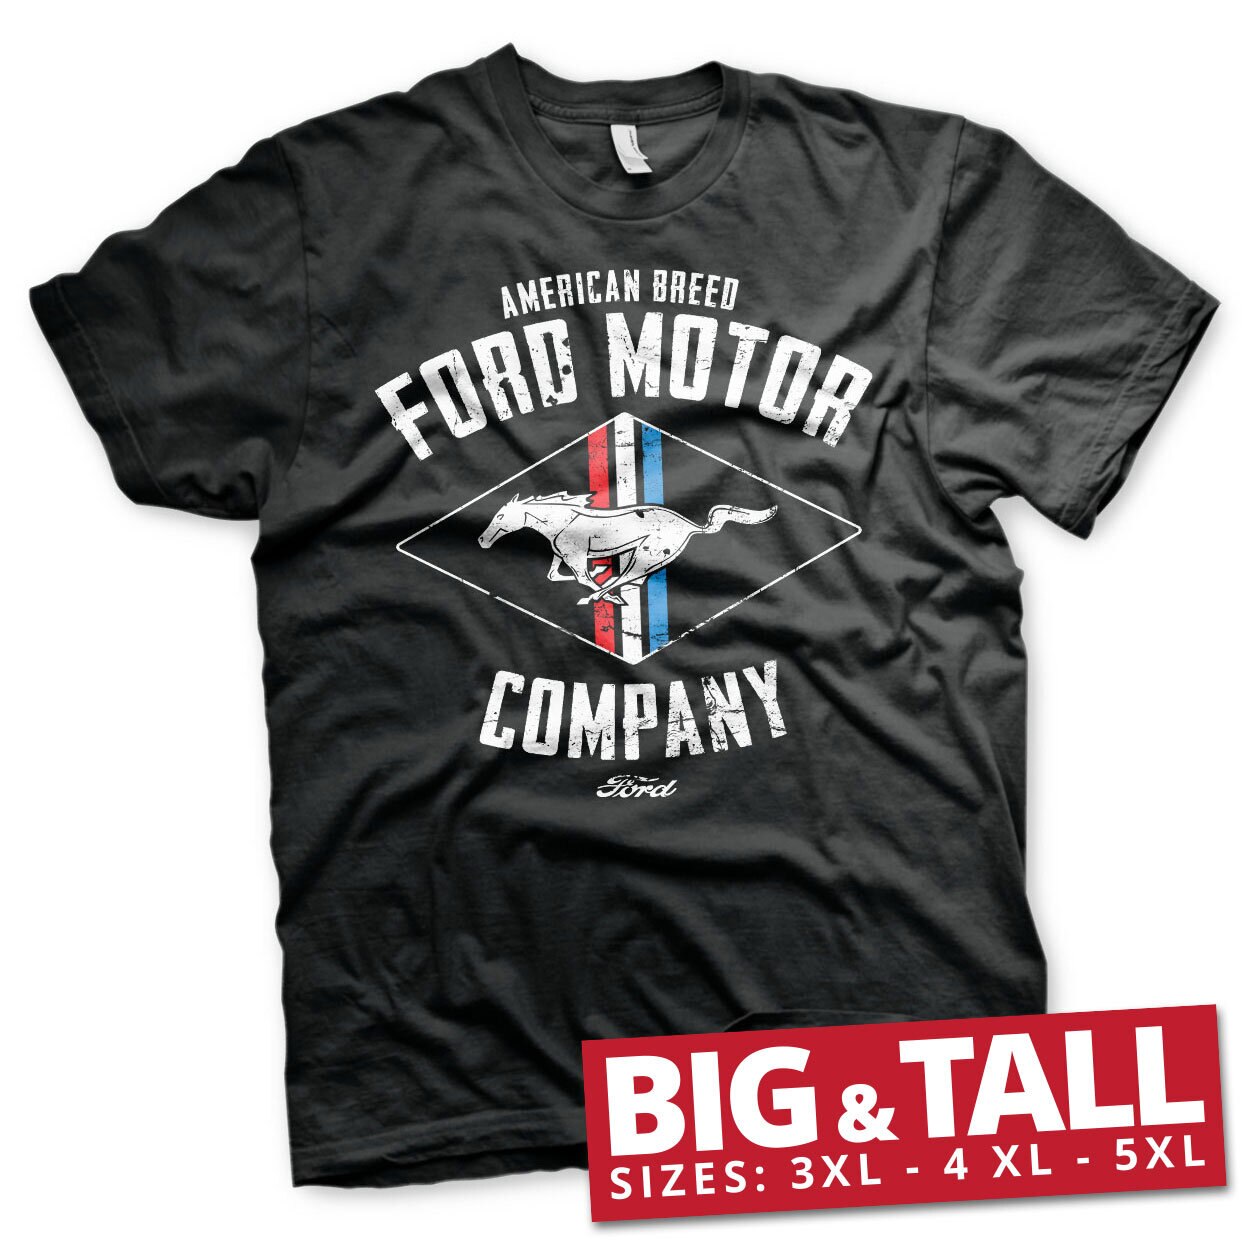 Ford Motor - American Breed Big & Tall T-Shirt